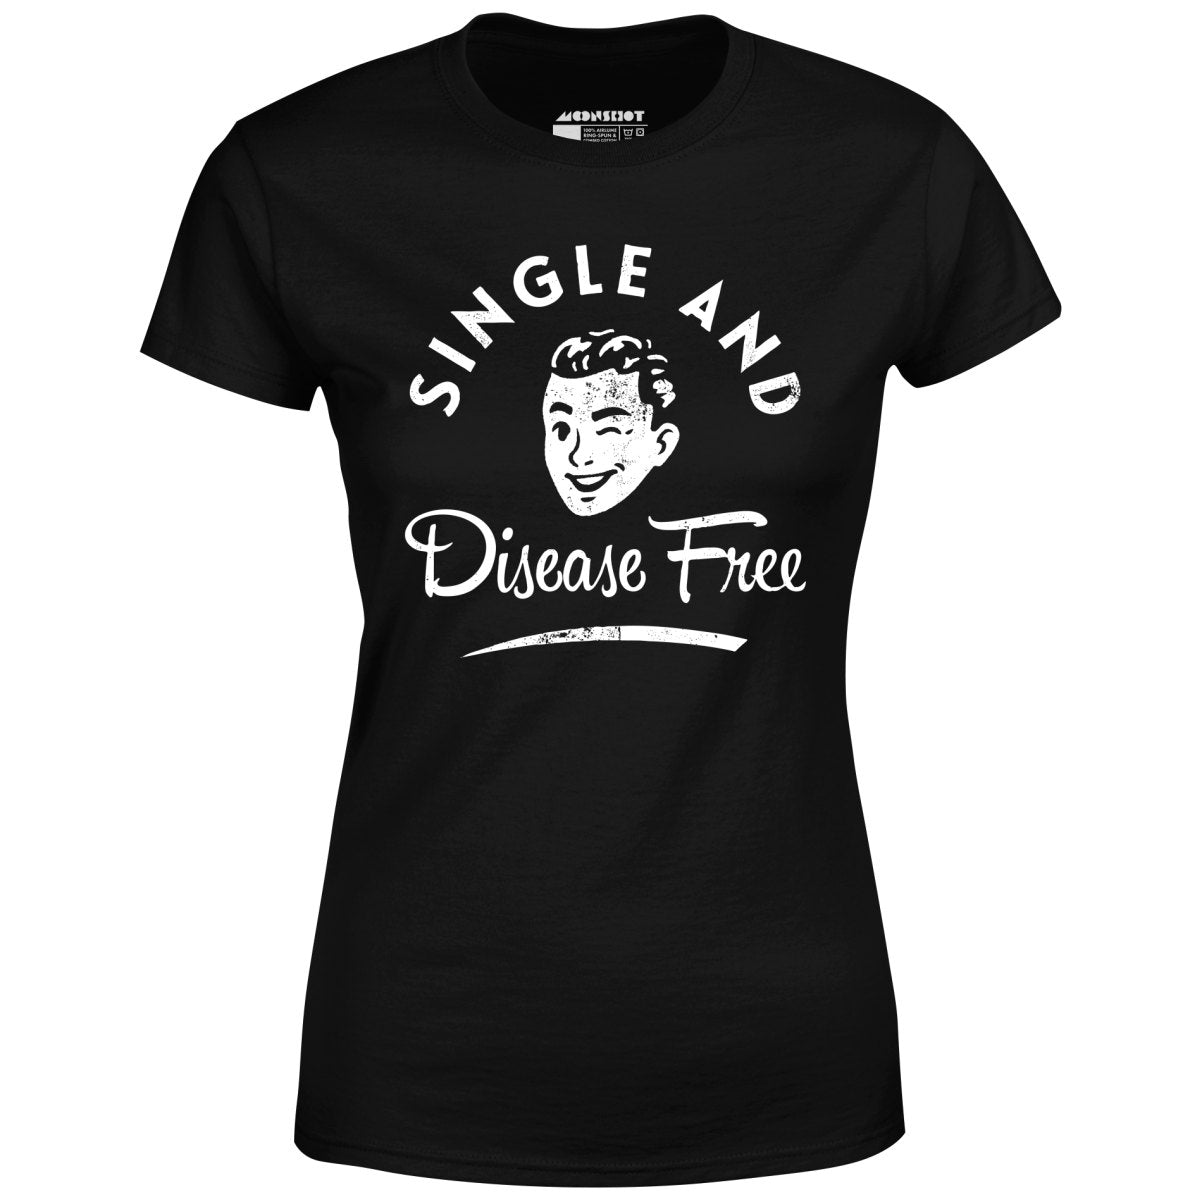 Single and Disease Free - Women's T-Shirt